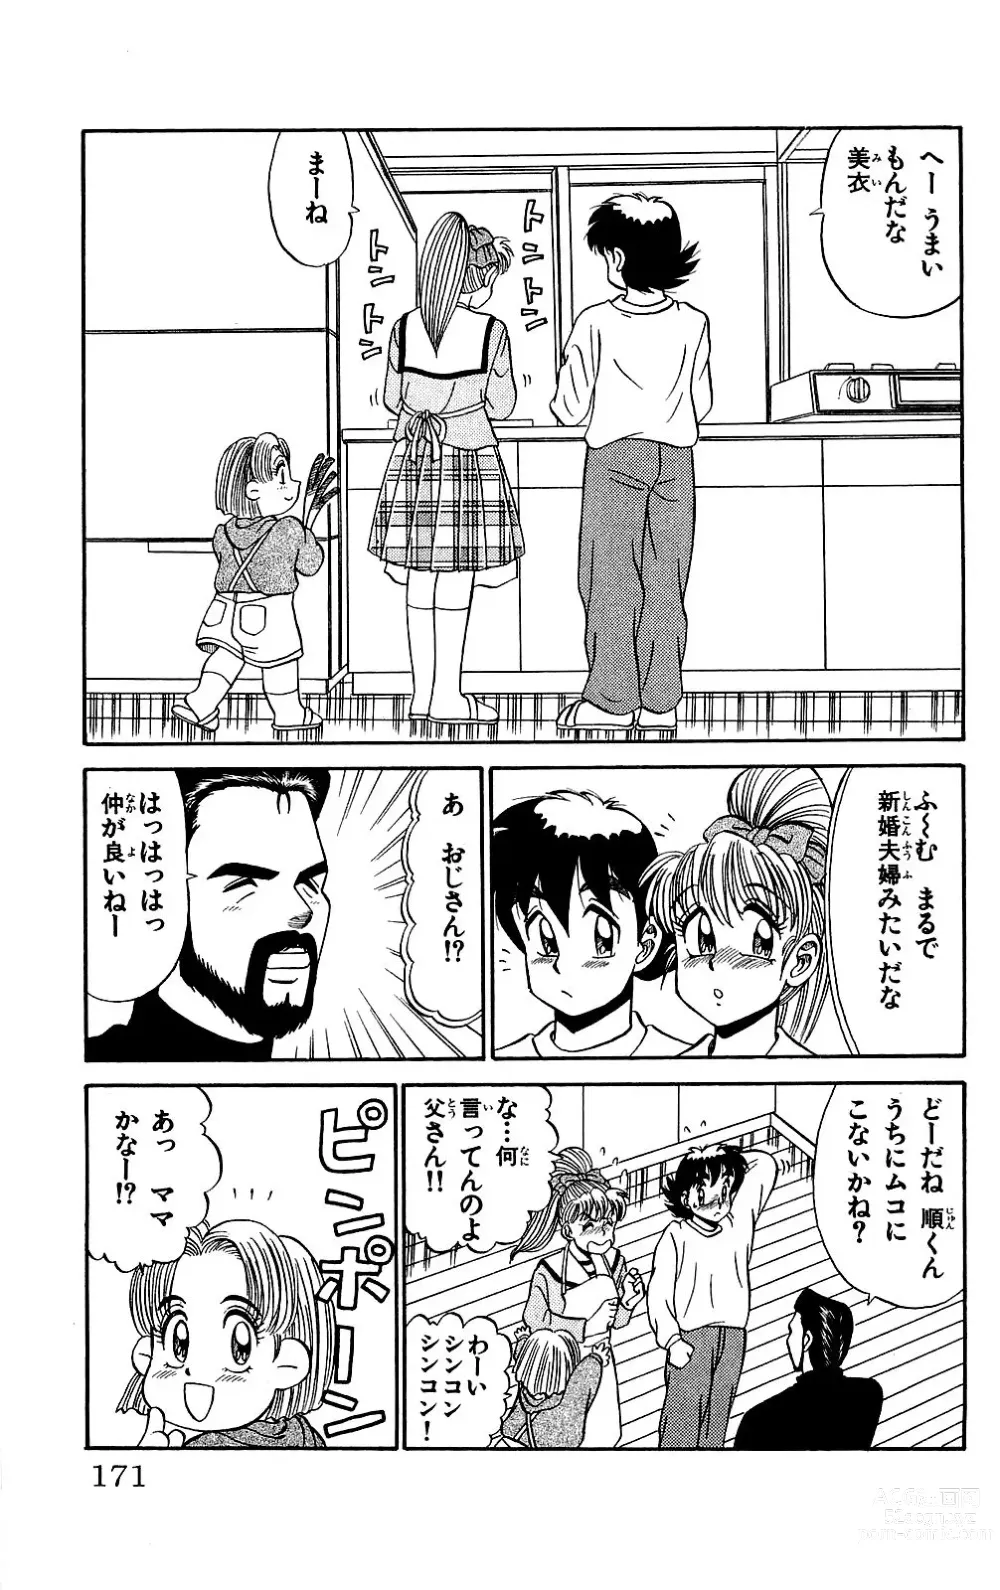 Page 169 of manga Orette Piyoritan Vol. 2